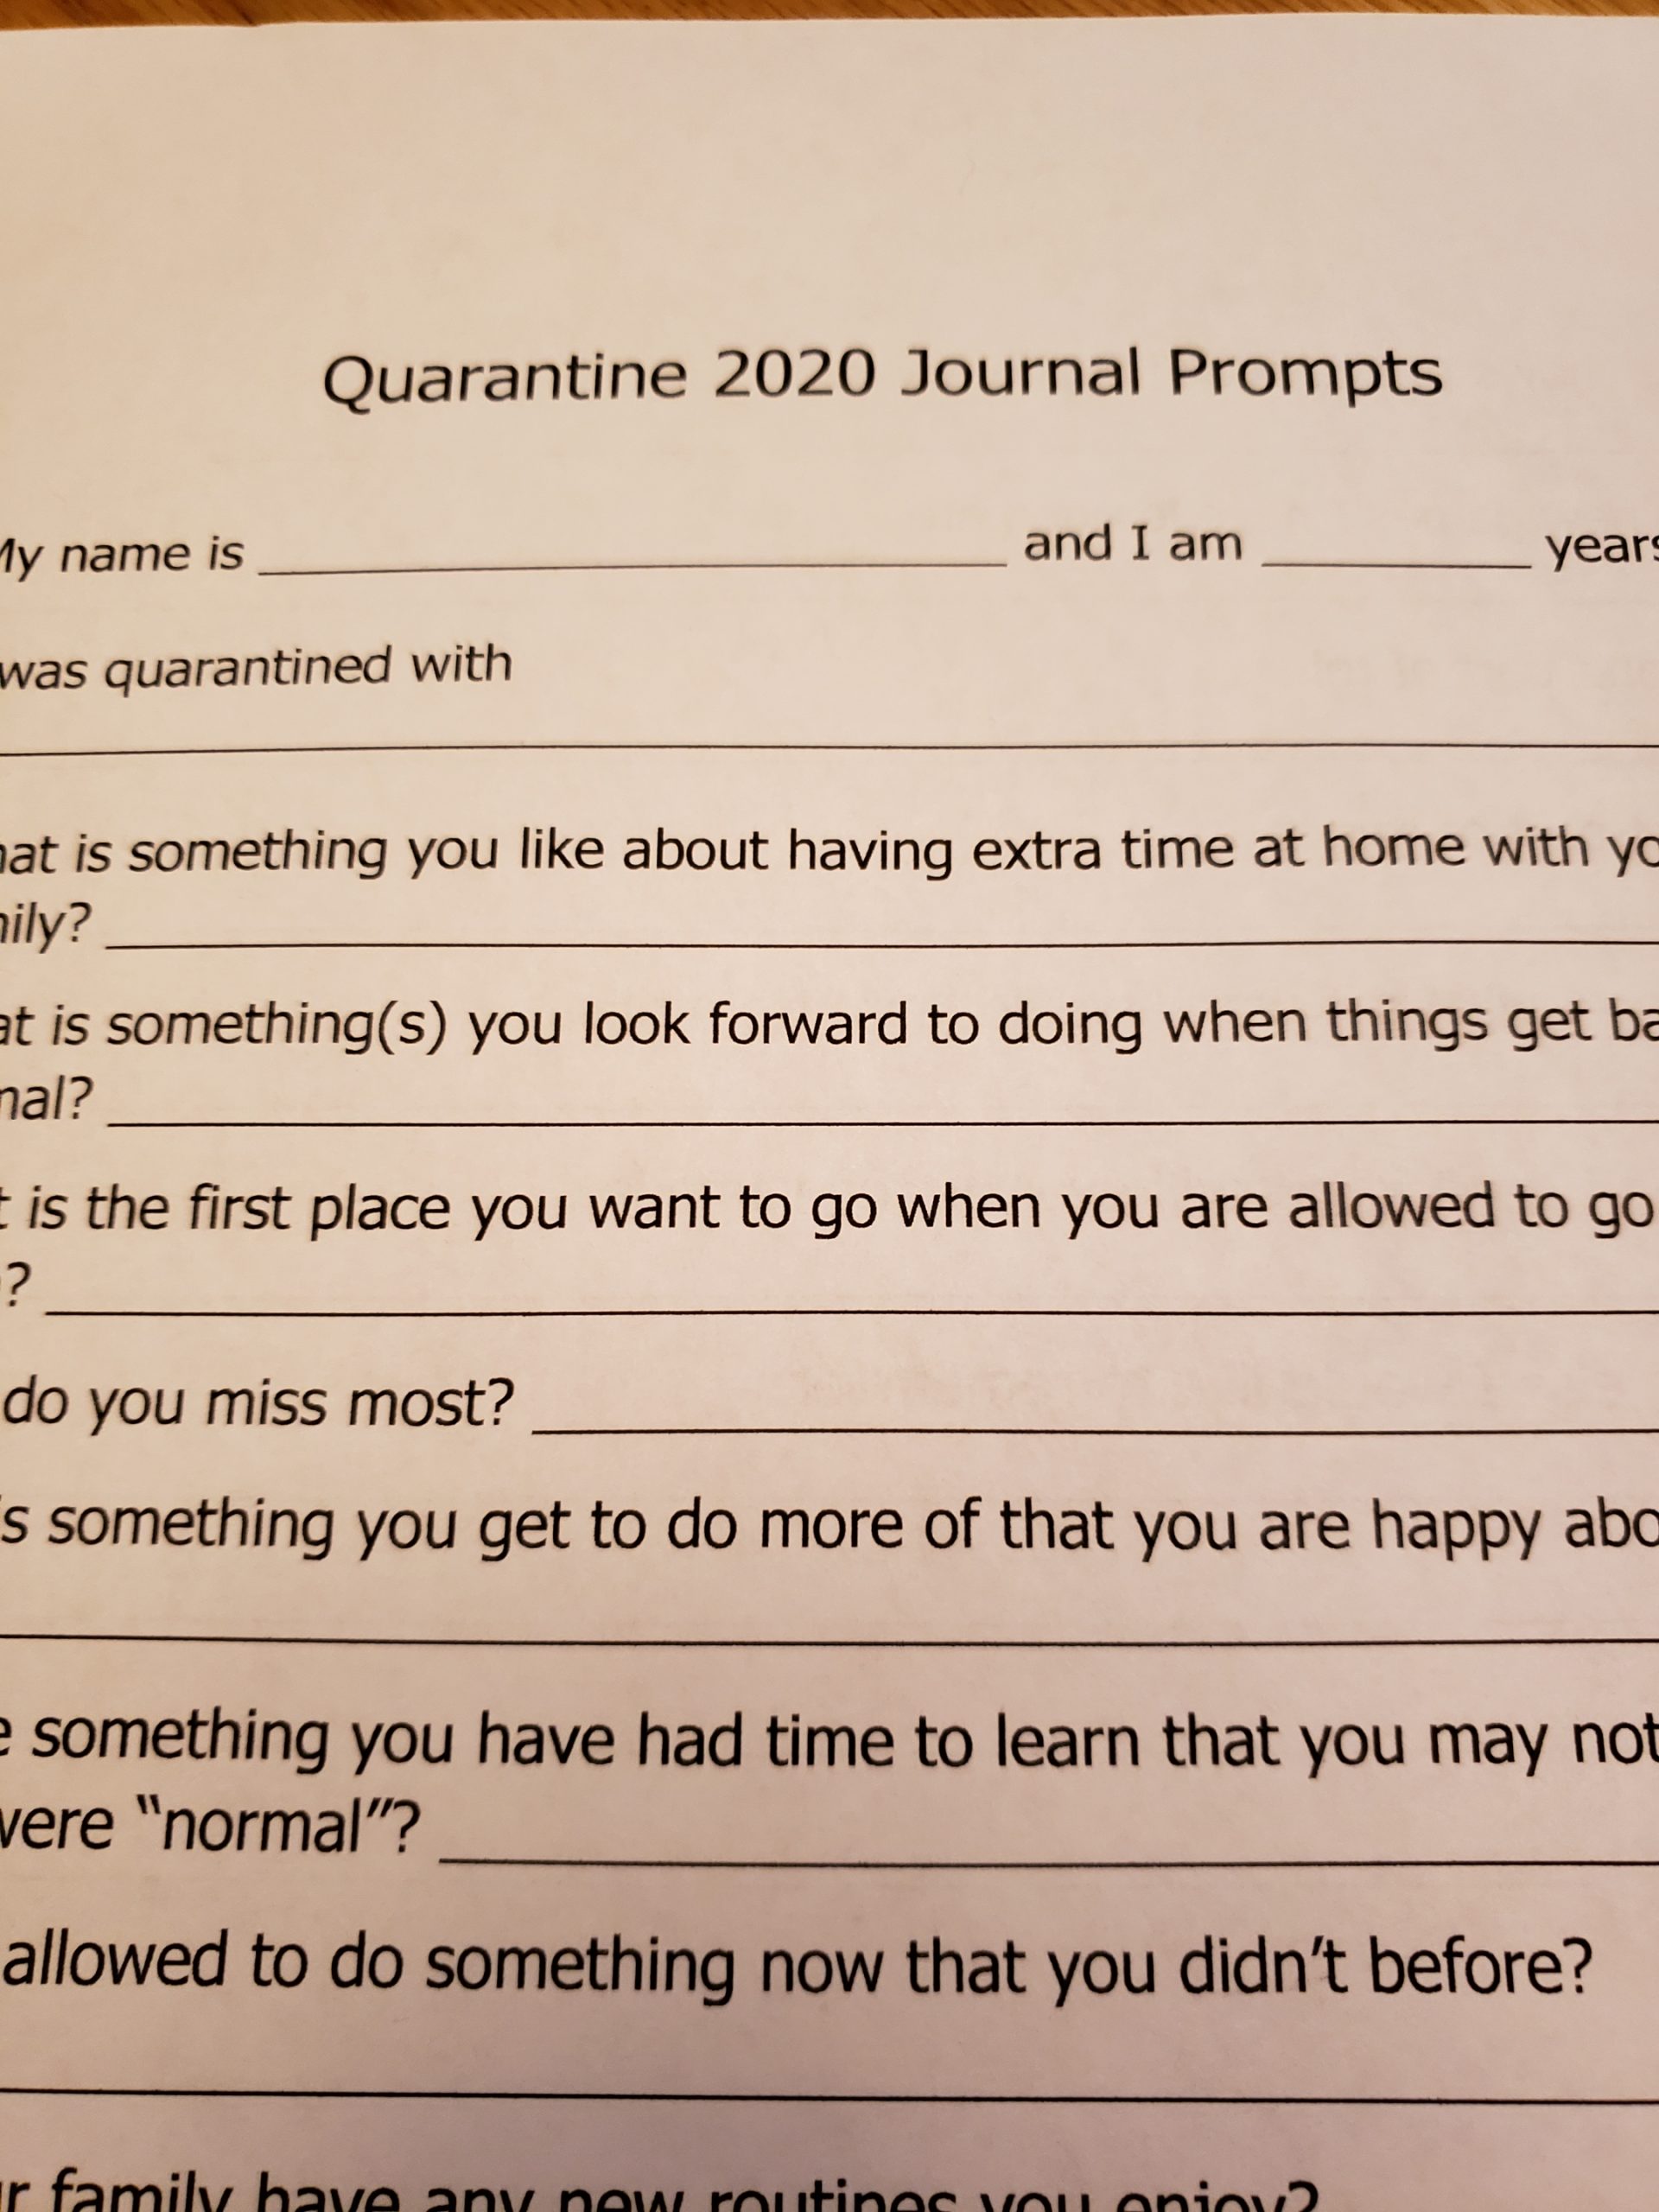 Quarantine Journal Prompts for Kids